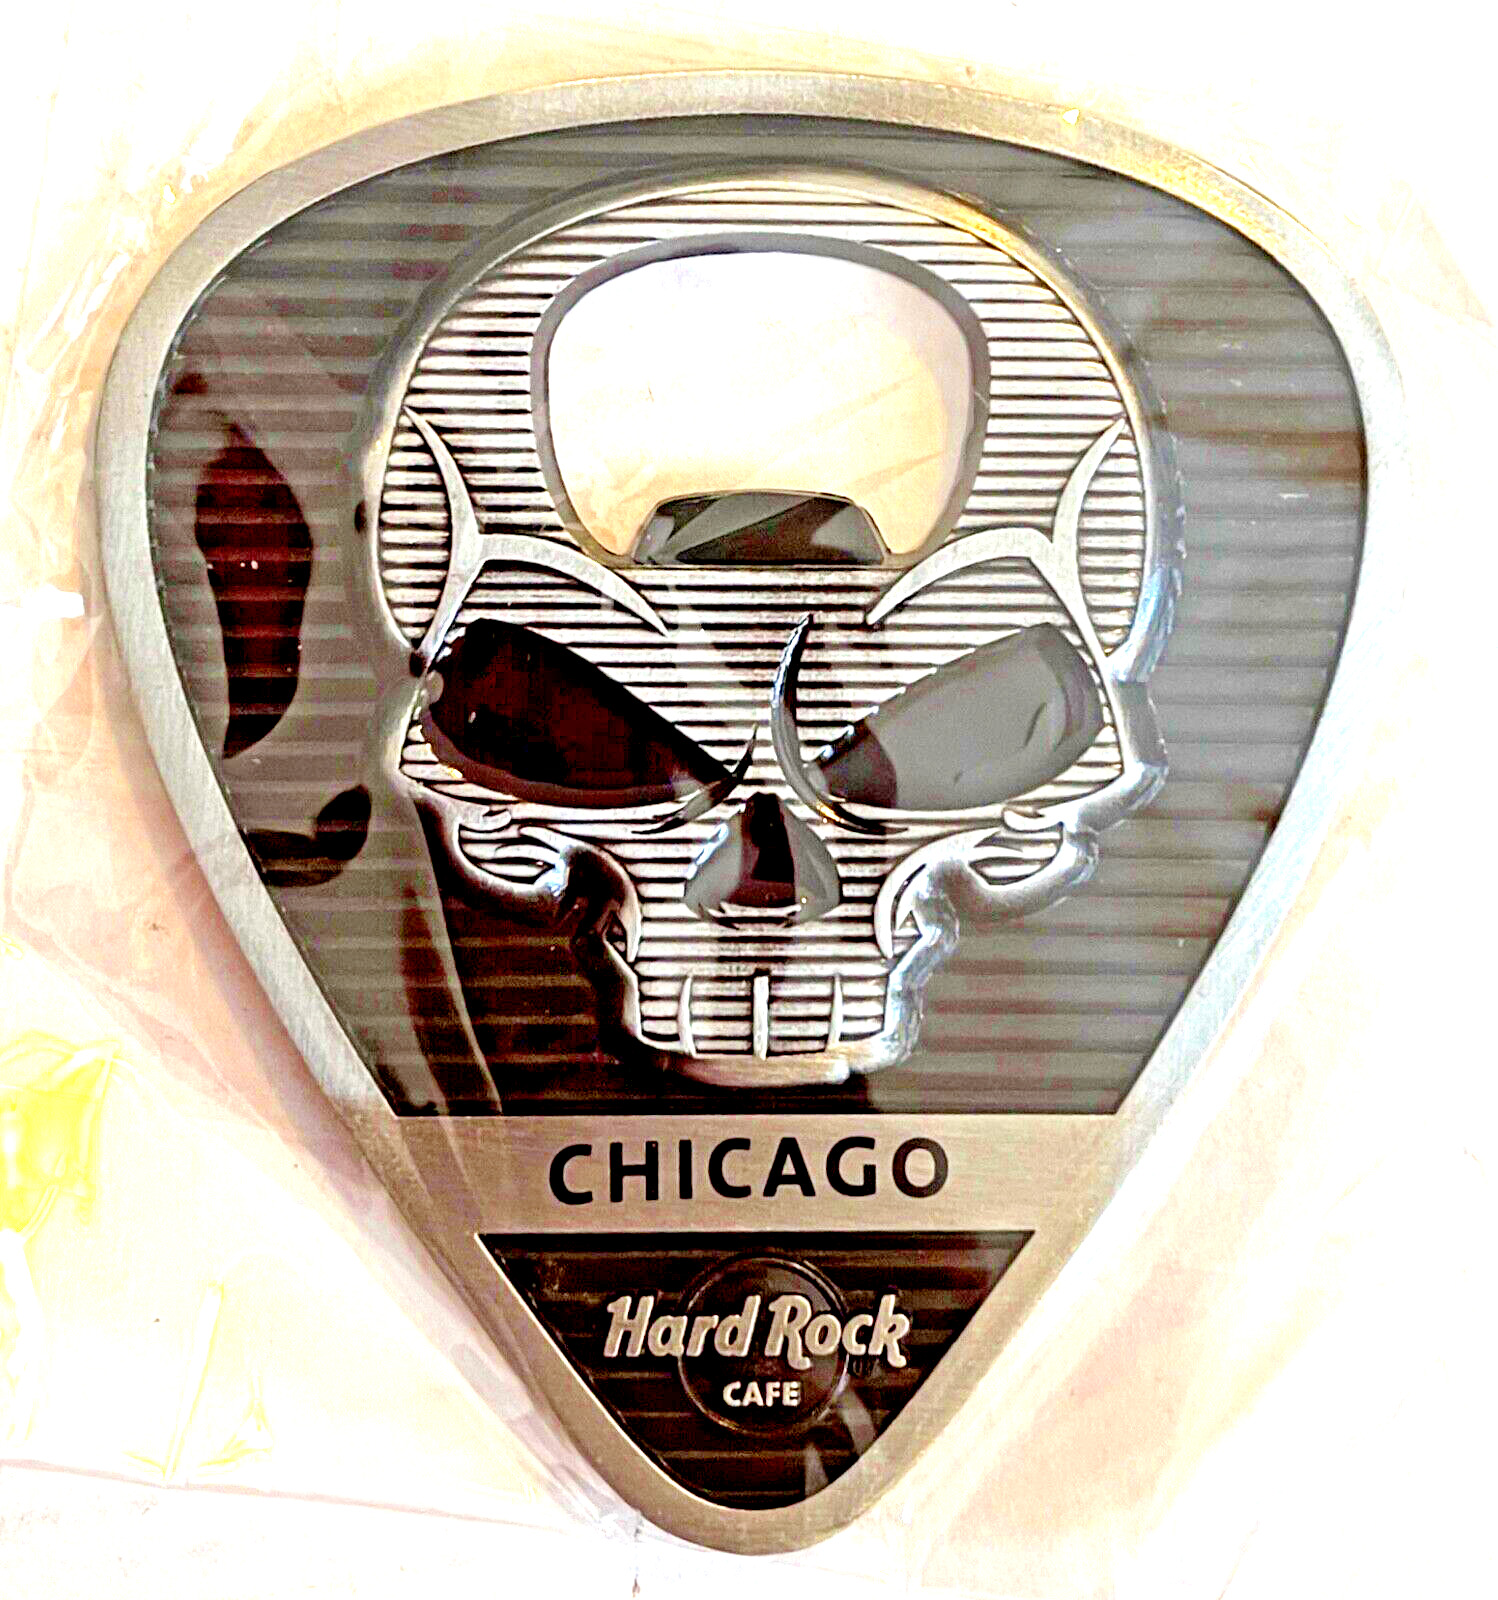 Hard Rock Cafe Chicago Magnet Bottle Opener Skull Guitar Pick 2020 New # 1032409